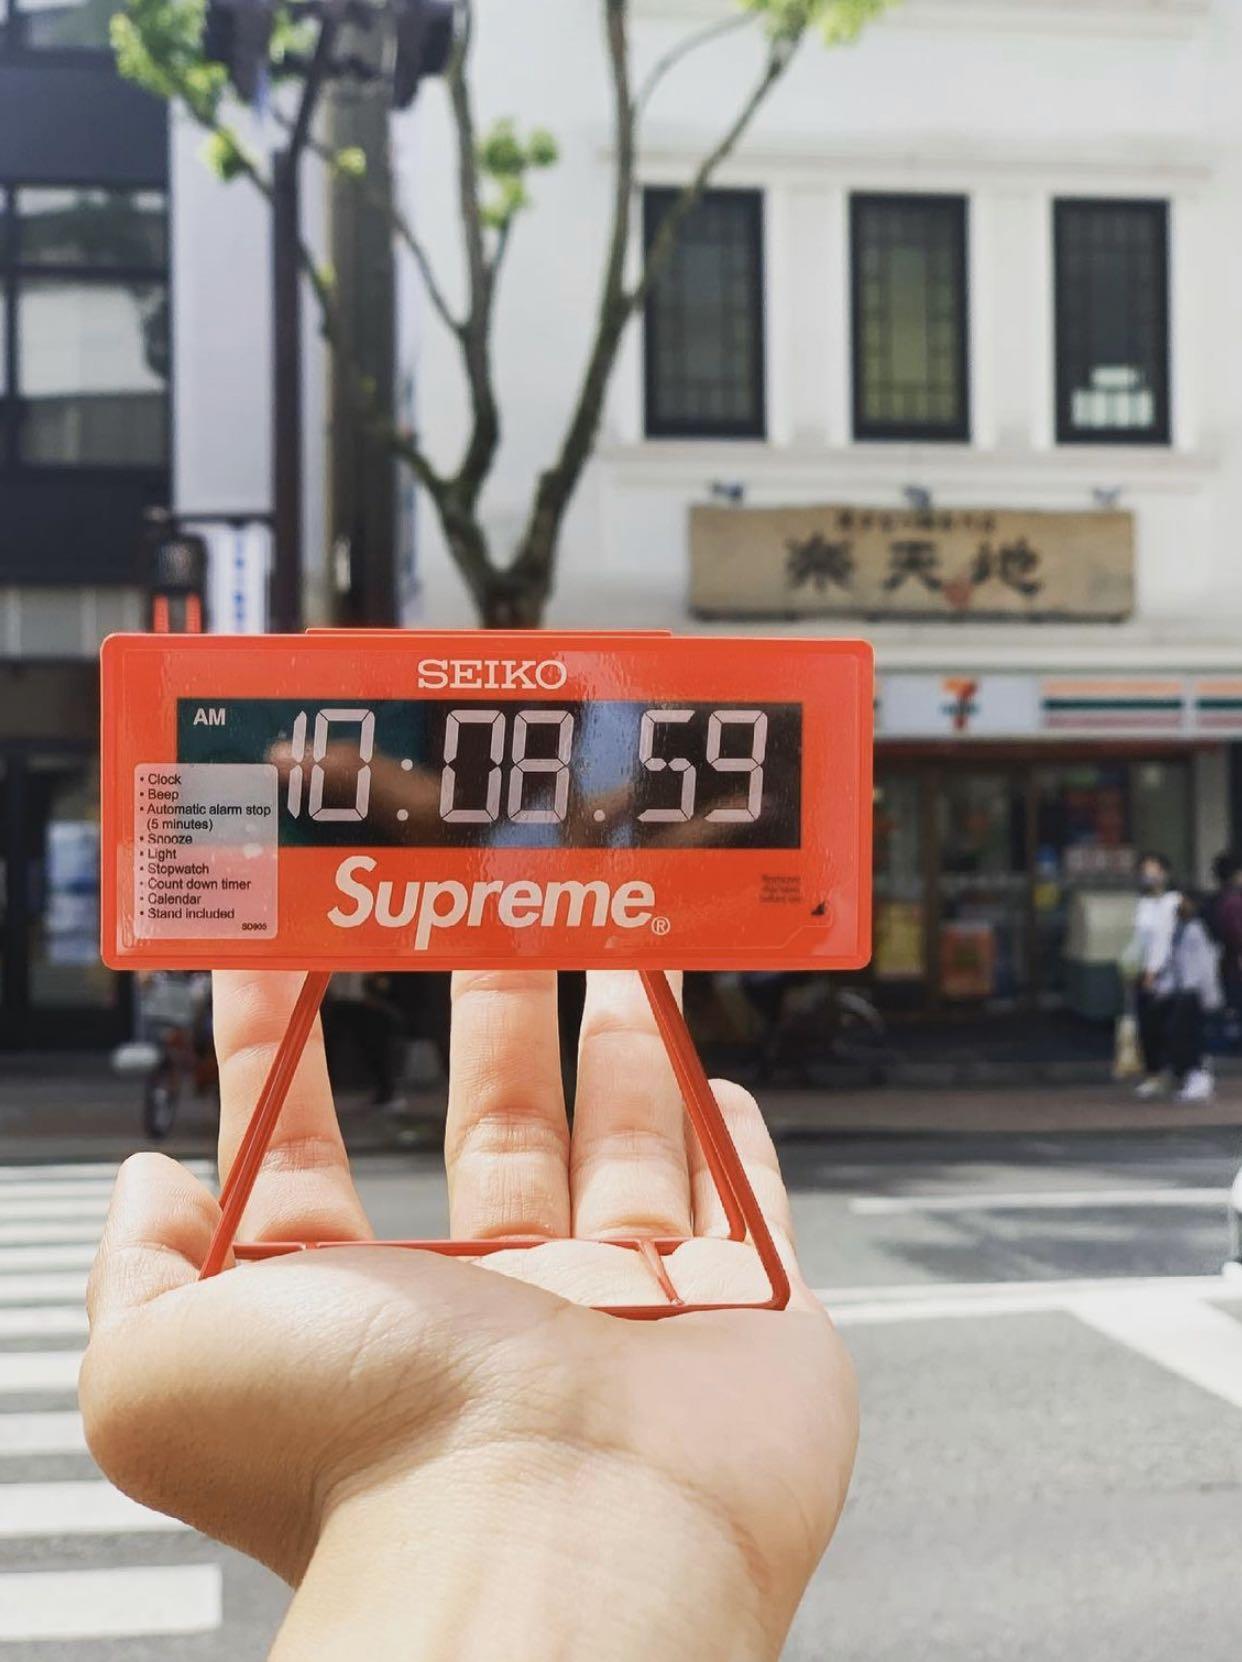 【 Red 】 Supreme / Seiko Marathon Clock